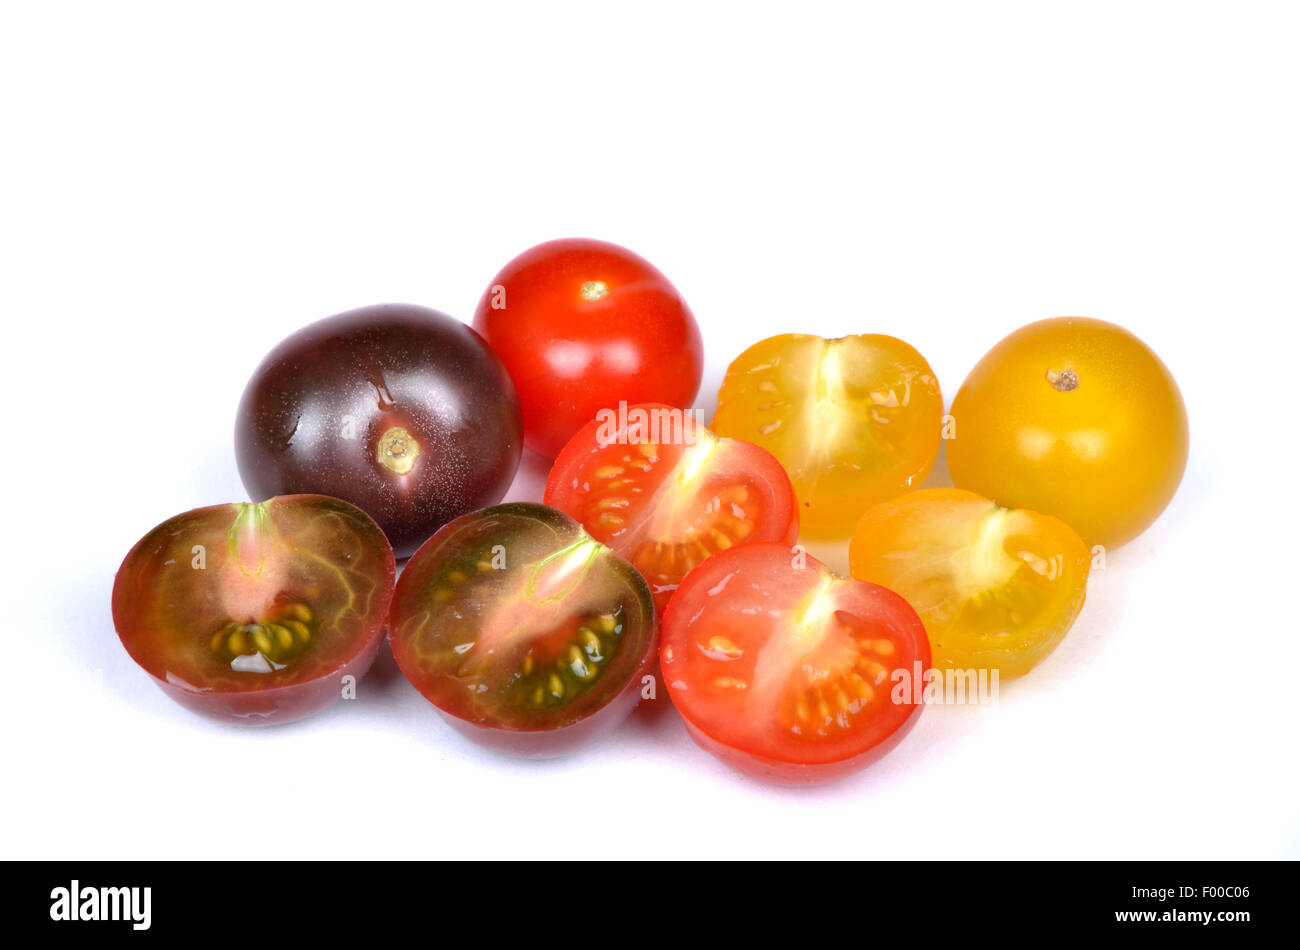 garden tomato (Solanum lycopersicum, Lycopersicon esculentum), cherry tomatoes in yellow, red and black Stock Photo